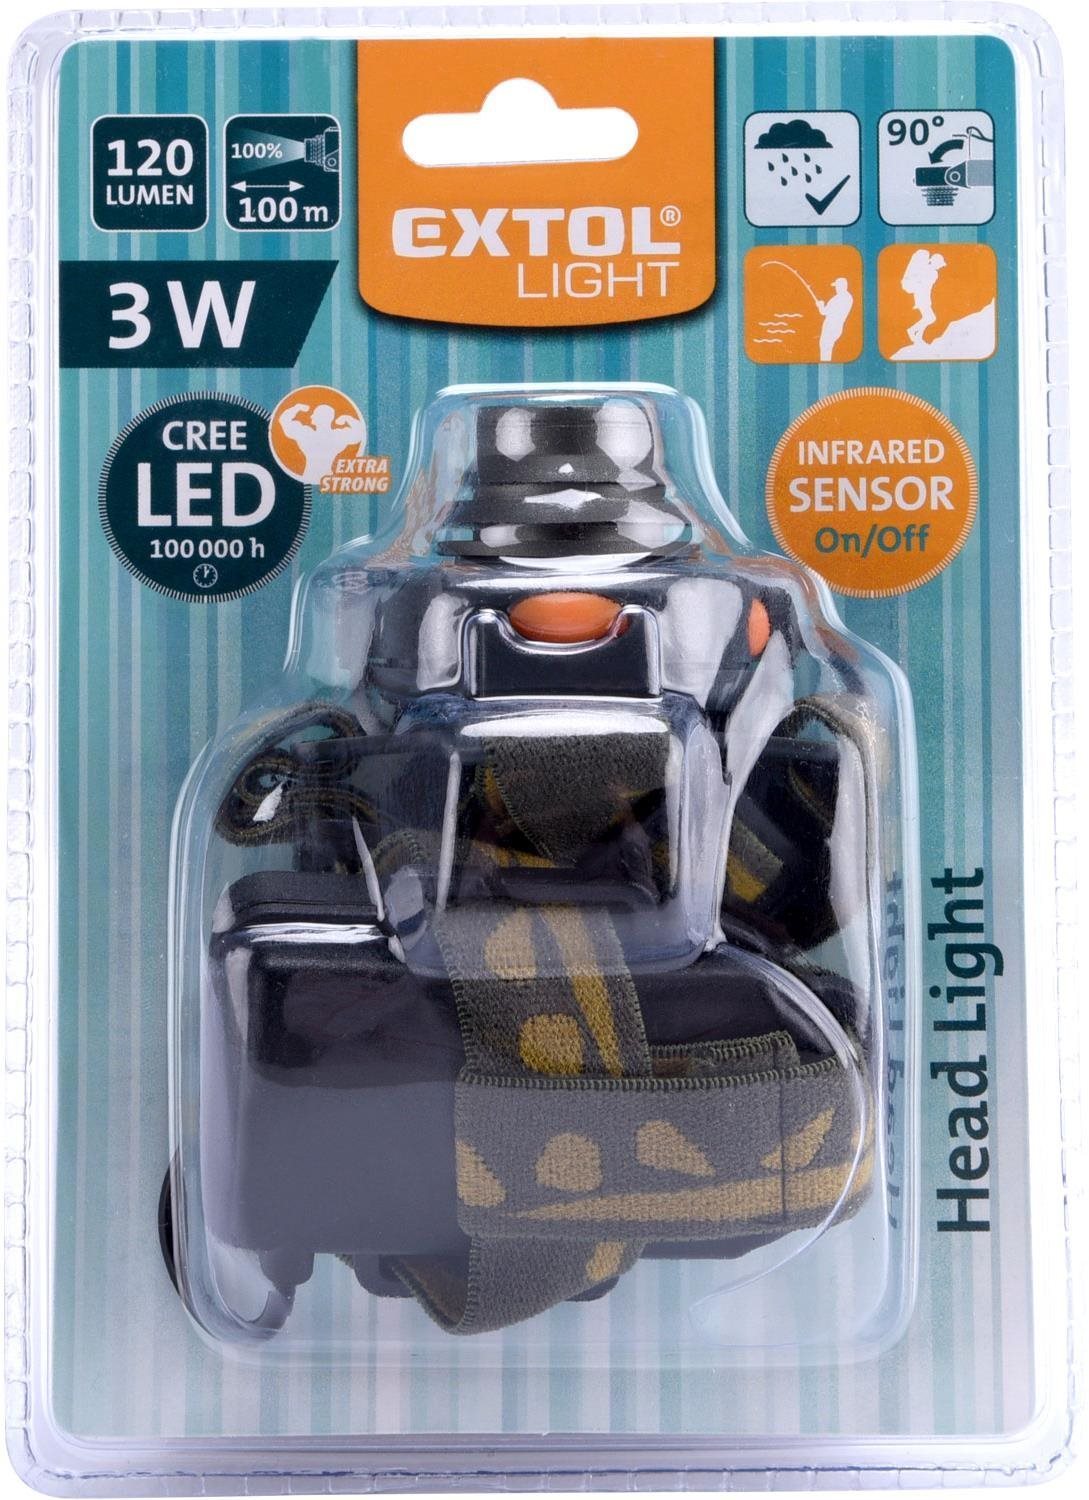 Headlamp EXTOL LIGHT Headlamp 120lm CREE with IR Sensor, CREE 3W XPE LED Packaging/box